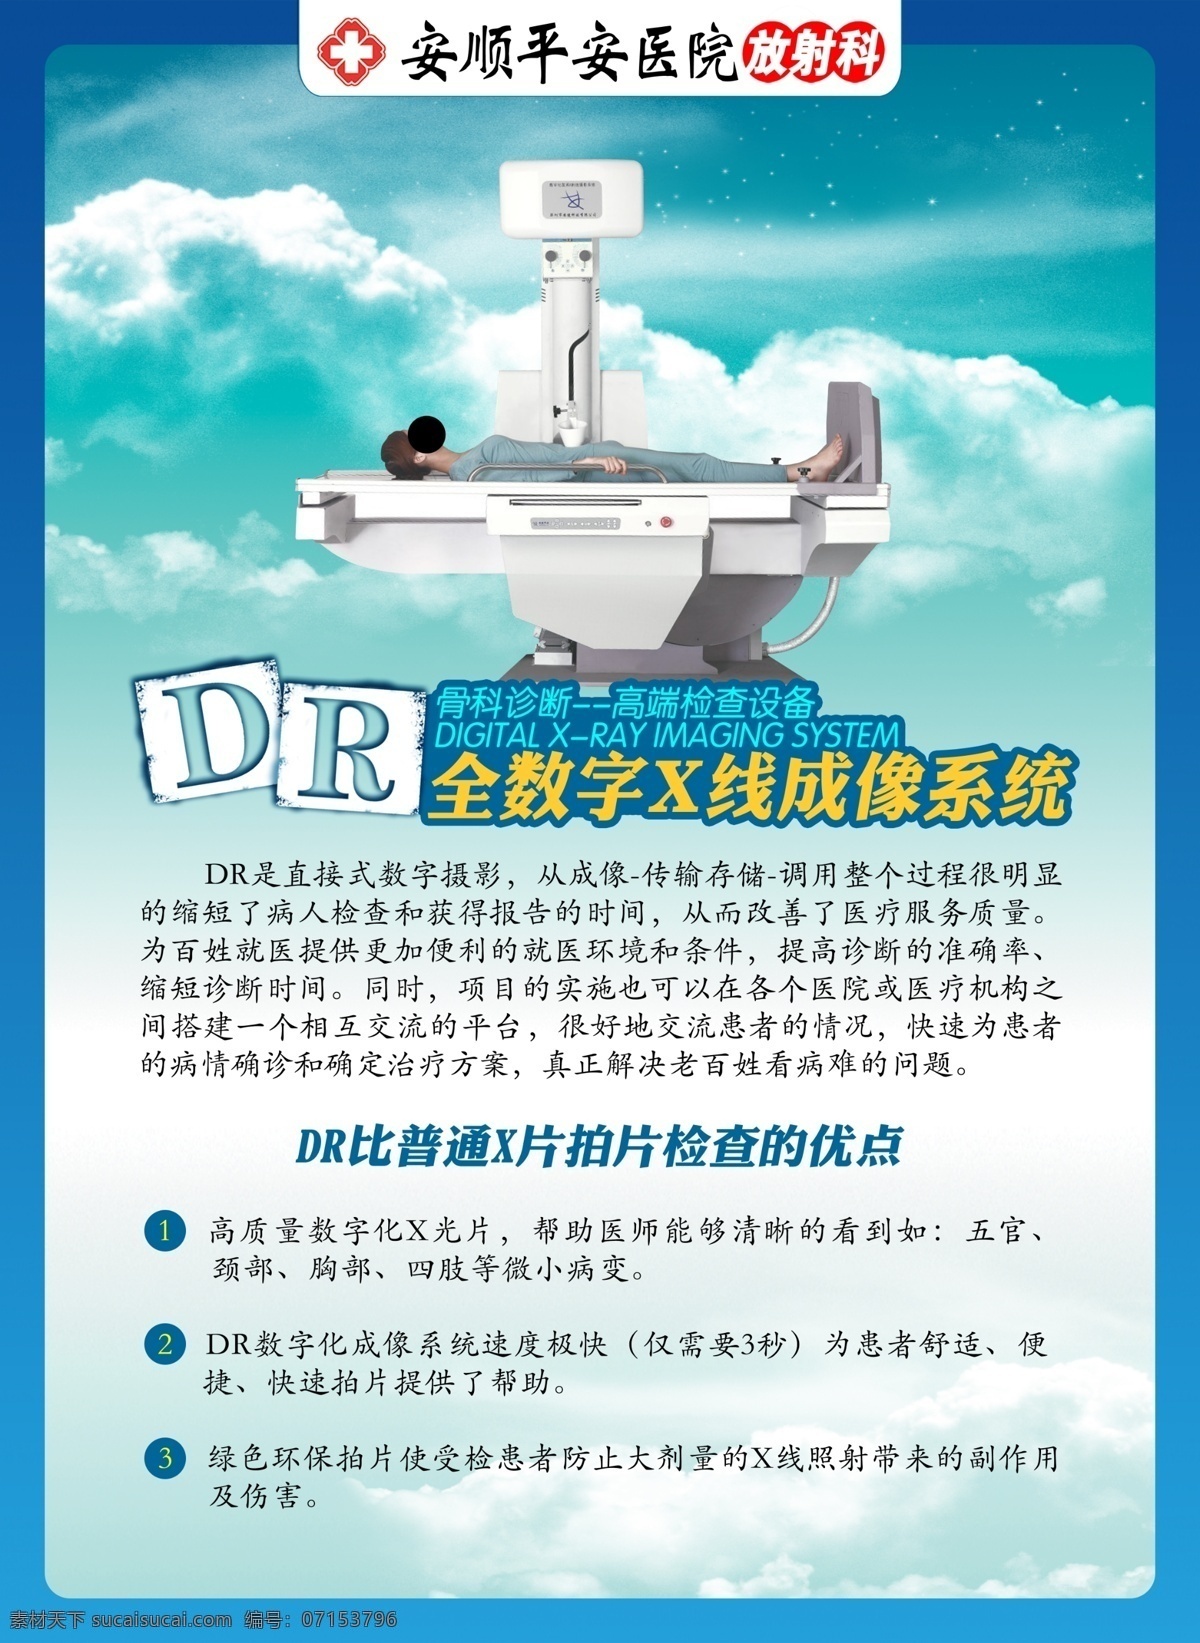 dr 全 数字化 x 线 摄像 系统 全数字化 x线 摄像系统 放射科 医疗 室内广告设计